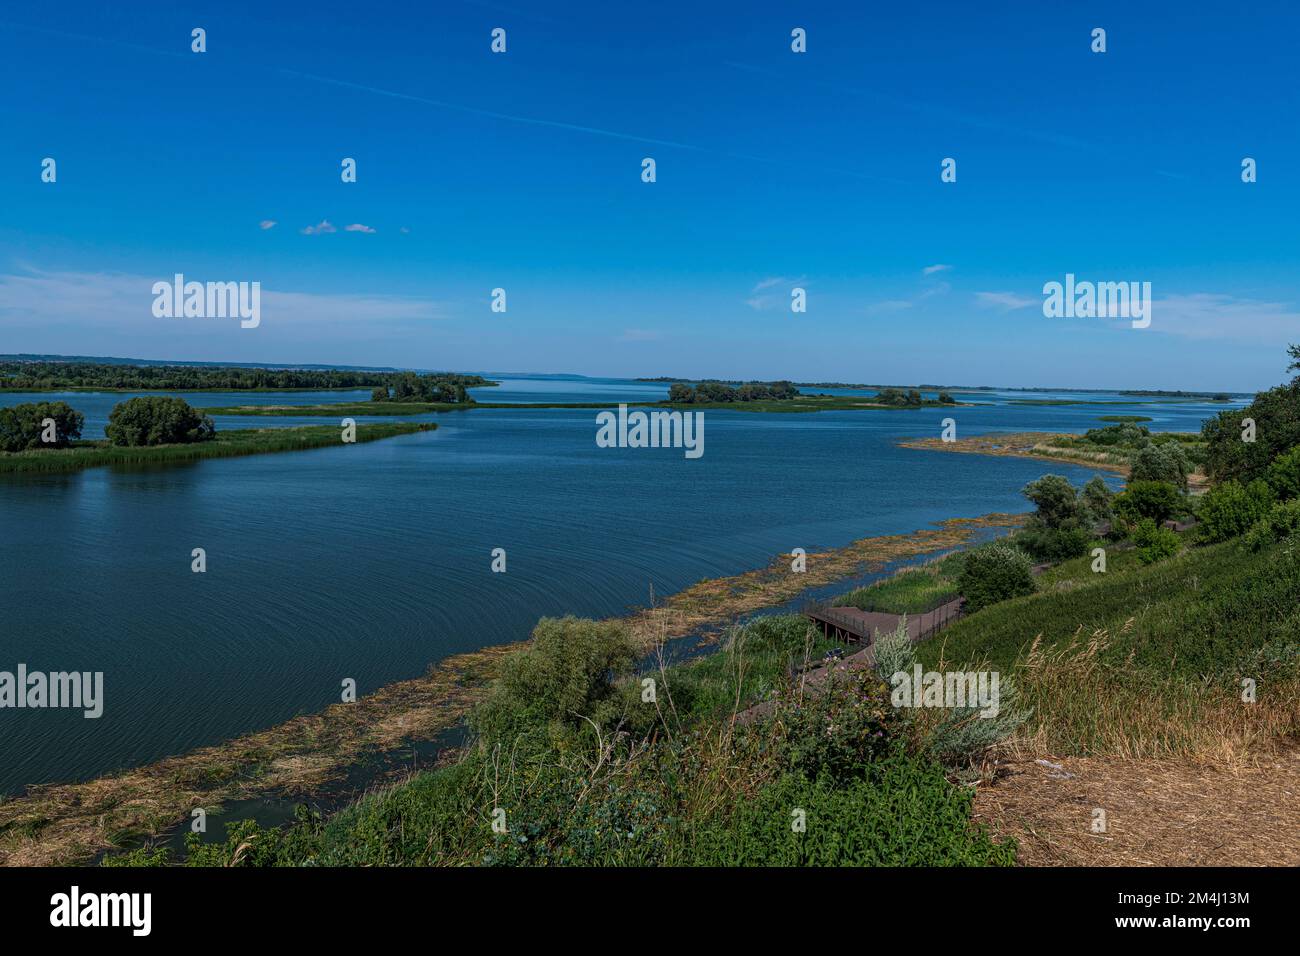 Overlook over the Volga, Unesco site Bolgar, Republic of Tartastan, Russia Stock Photo